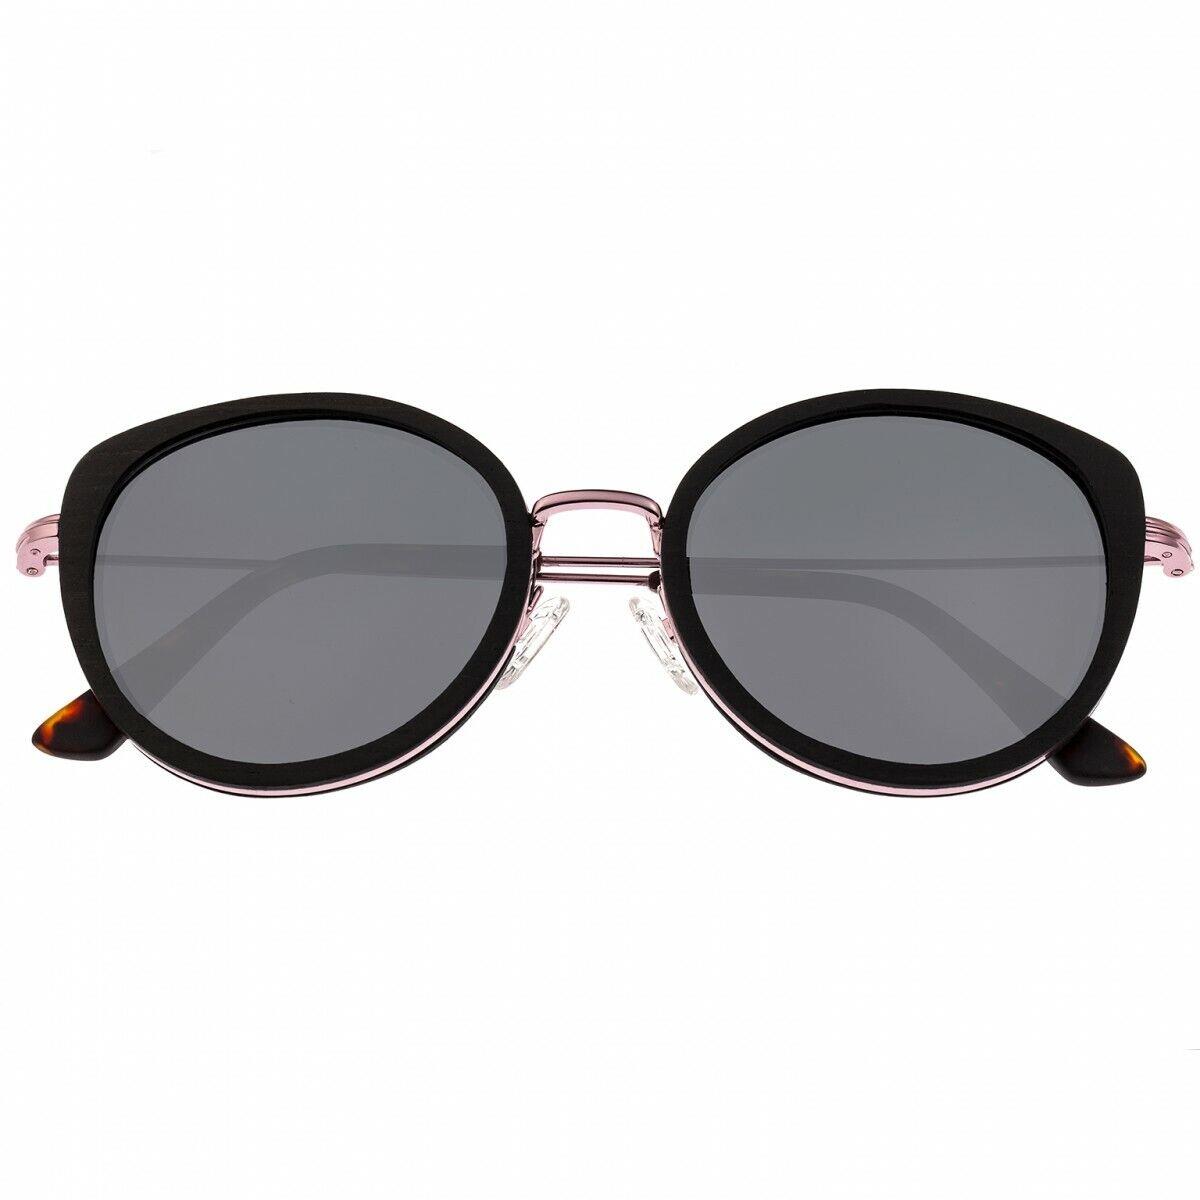 Earth Wood Oreti Polarized Sunglasses - Espresso/black